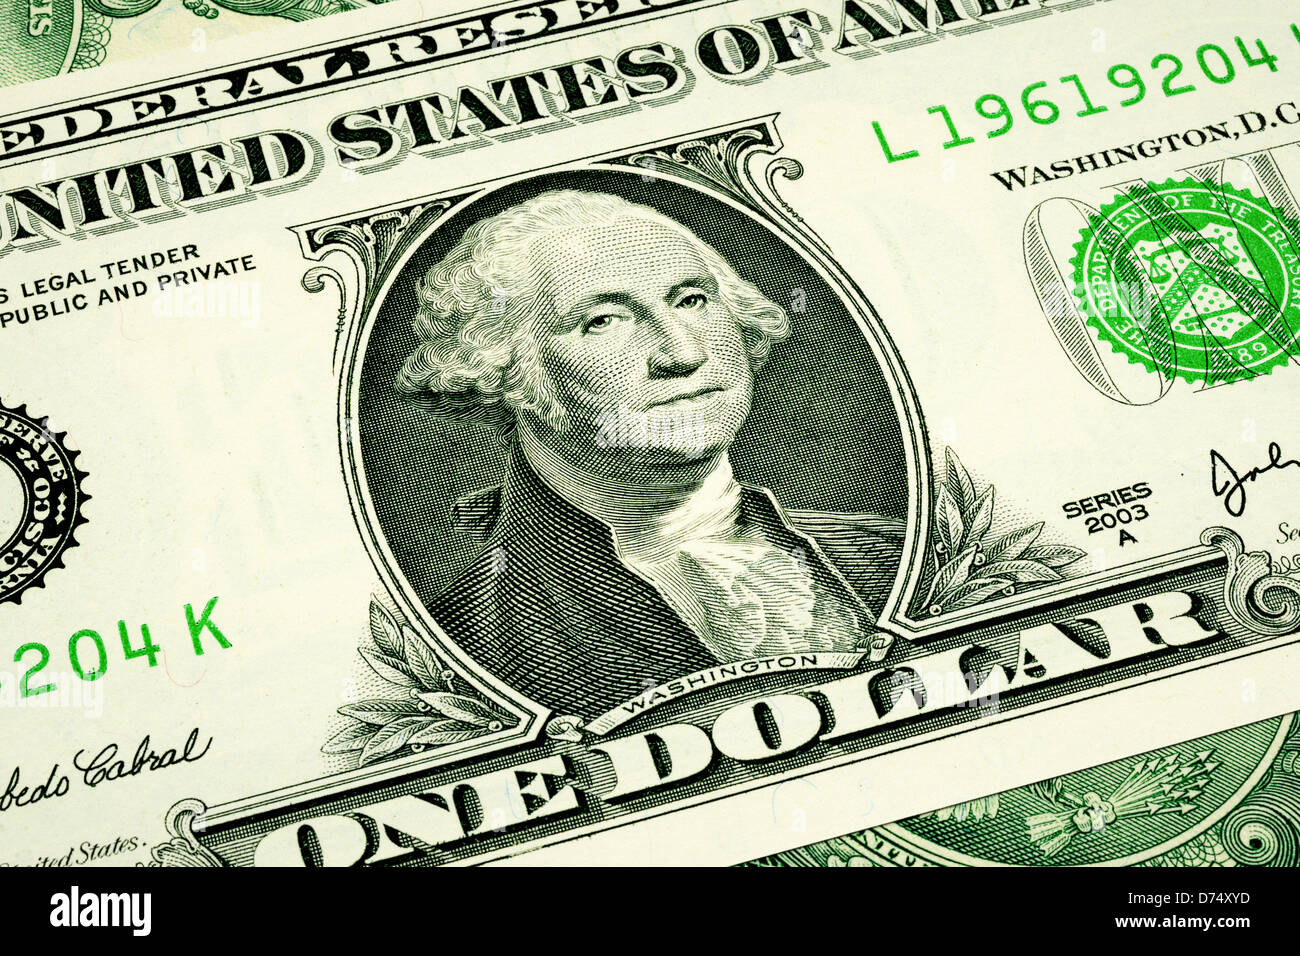 Dollar bill - close up Stock Photo